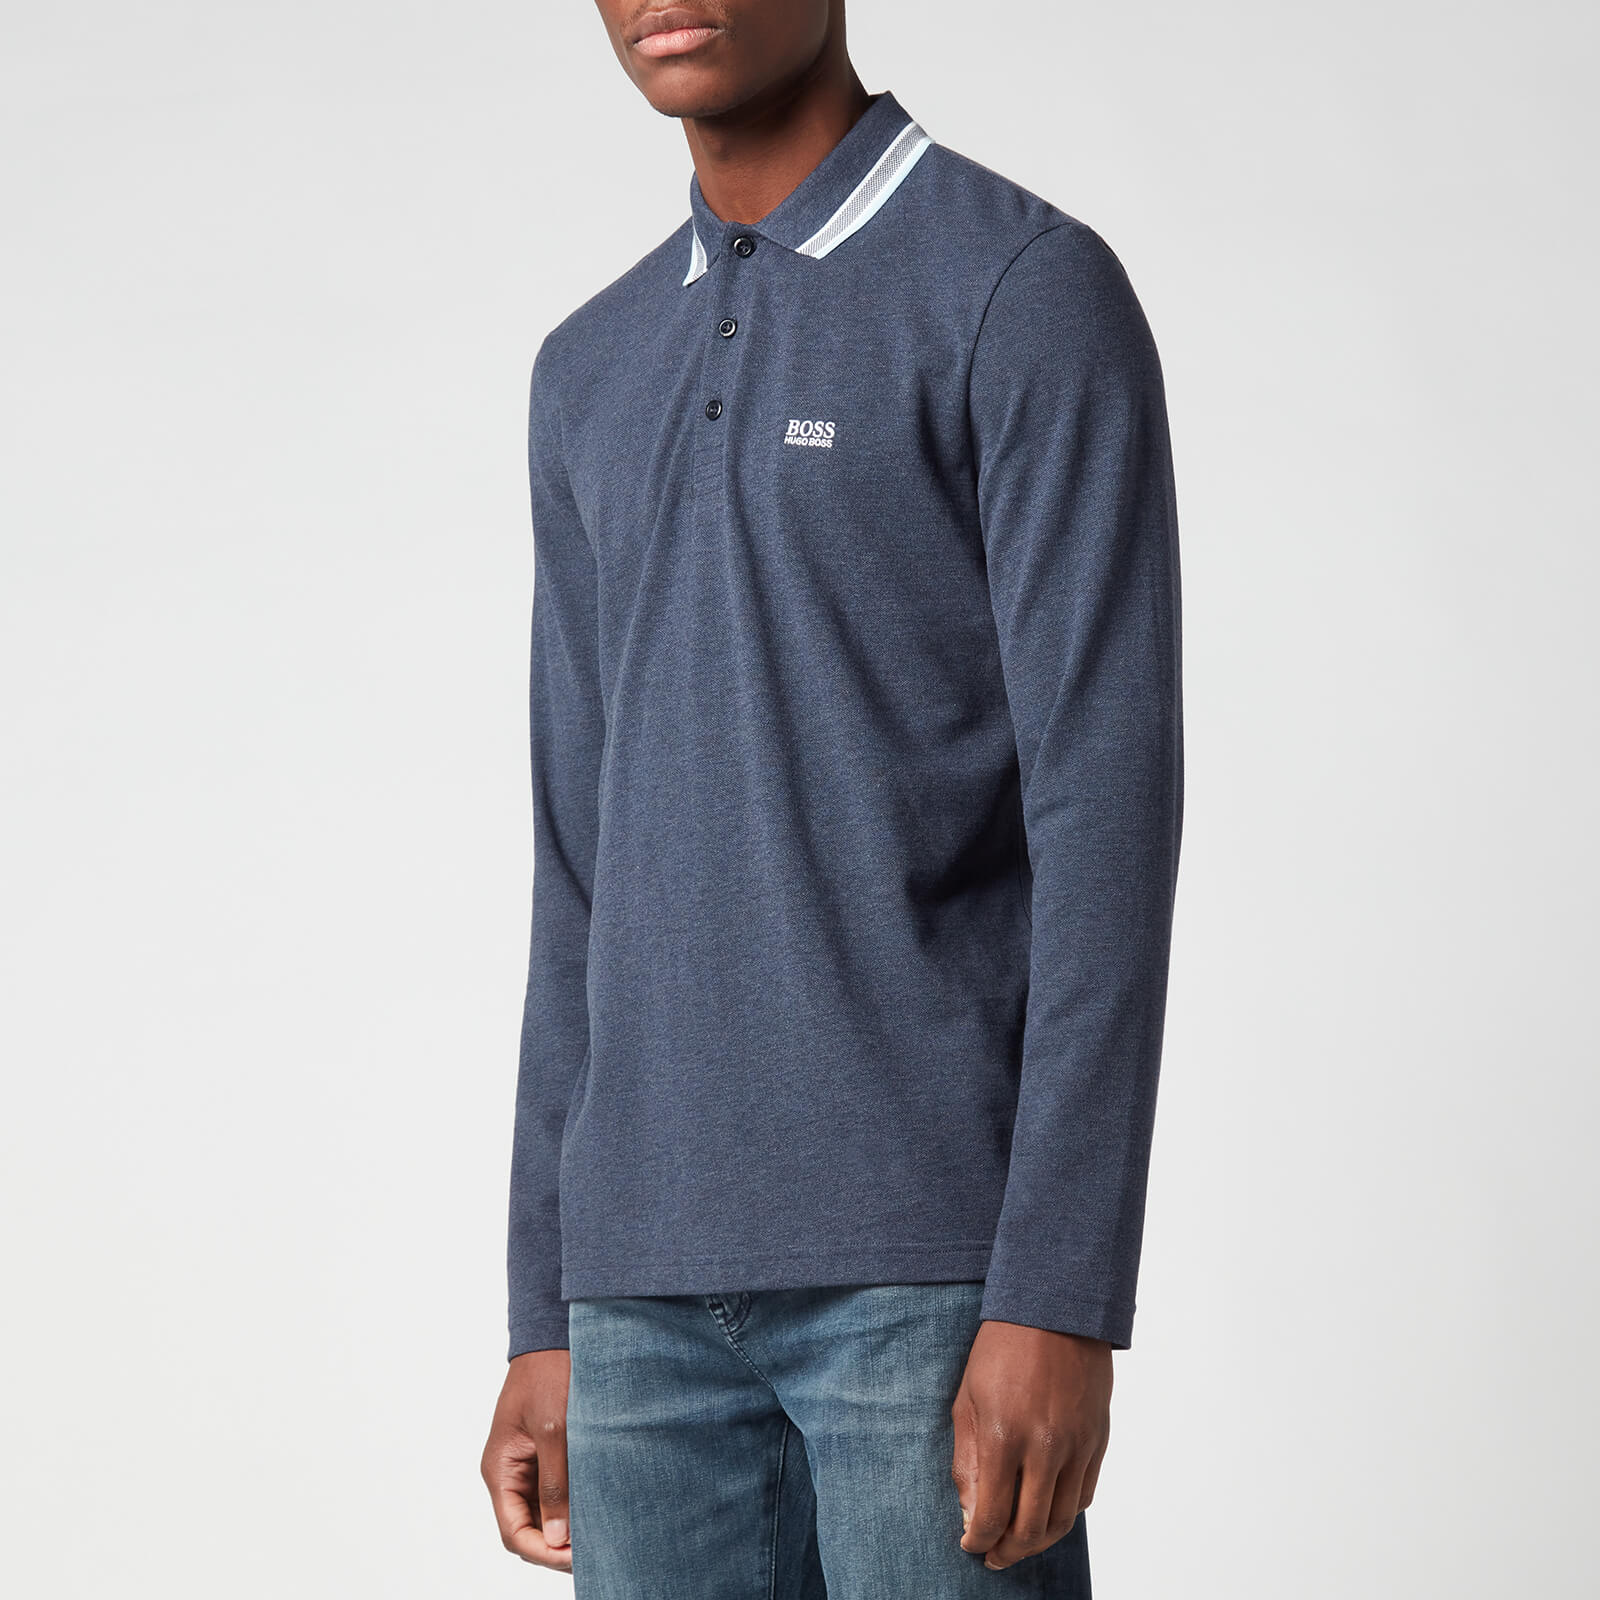 BOSS Athleisure Men's Plisy Long Sleeve Polo Shirt - Dark Blue - S